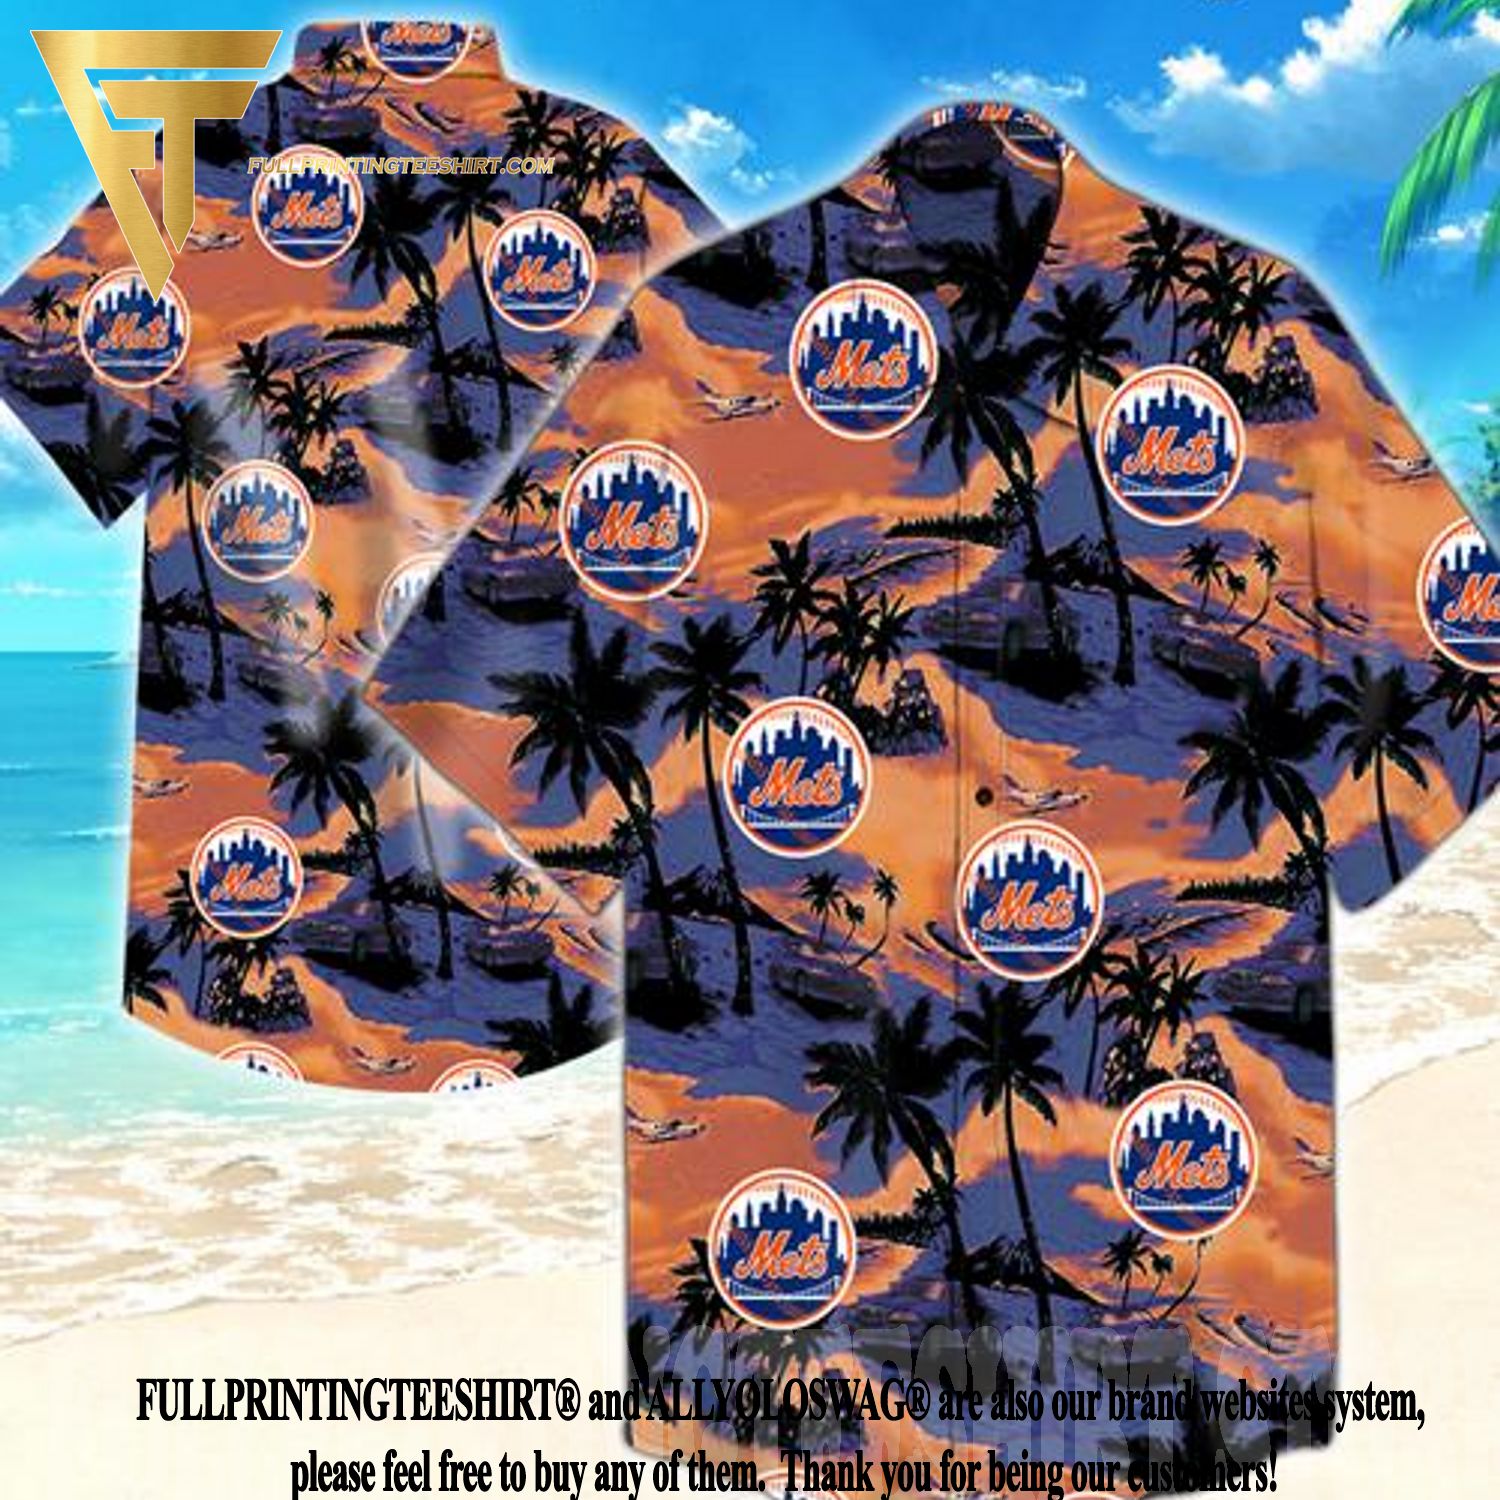 New York Mets Baseball Hawaiian Shirt Aloha Beach Summer